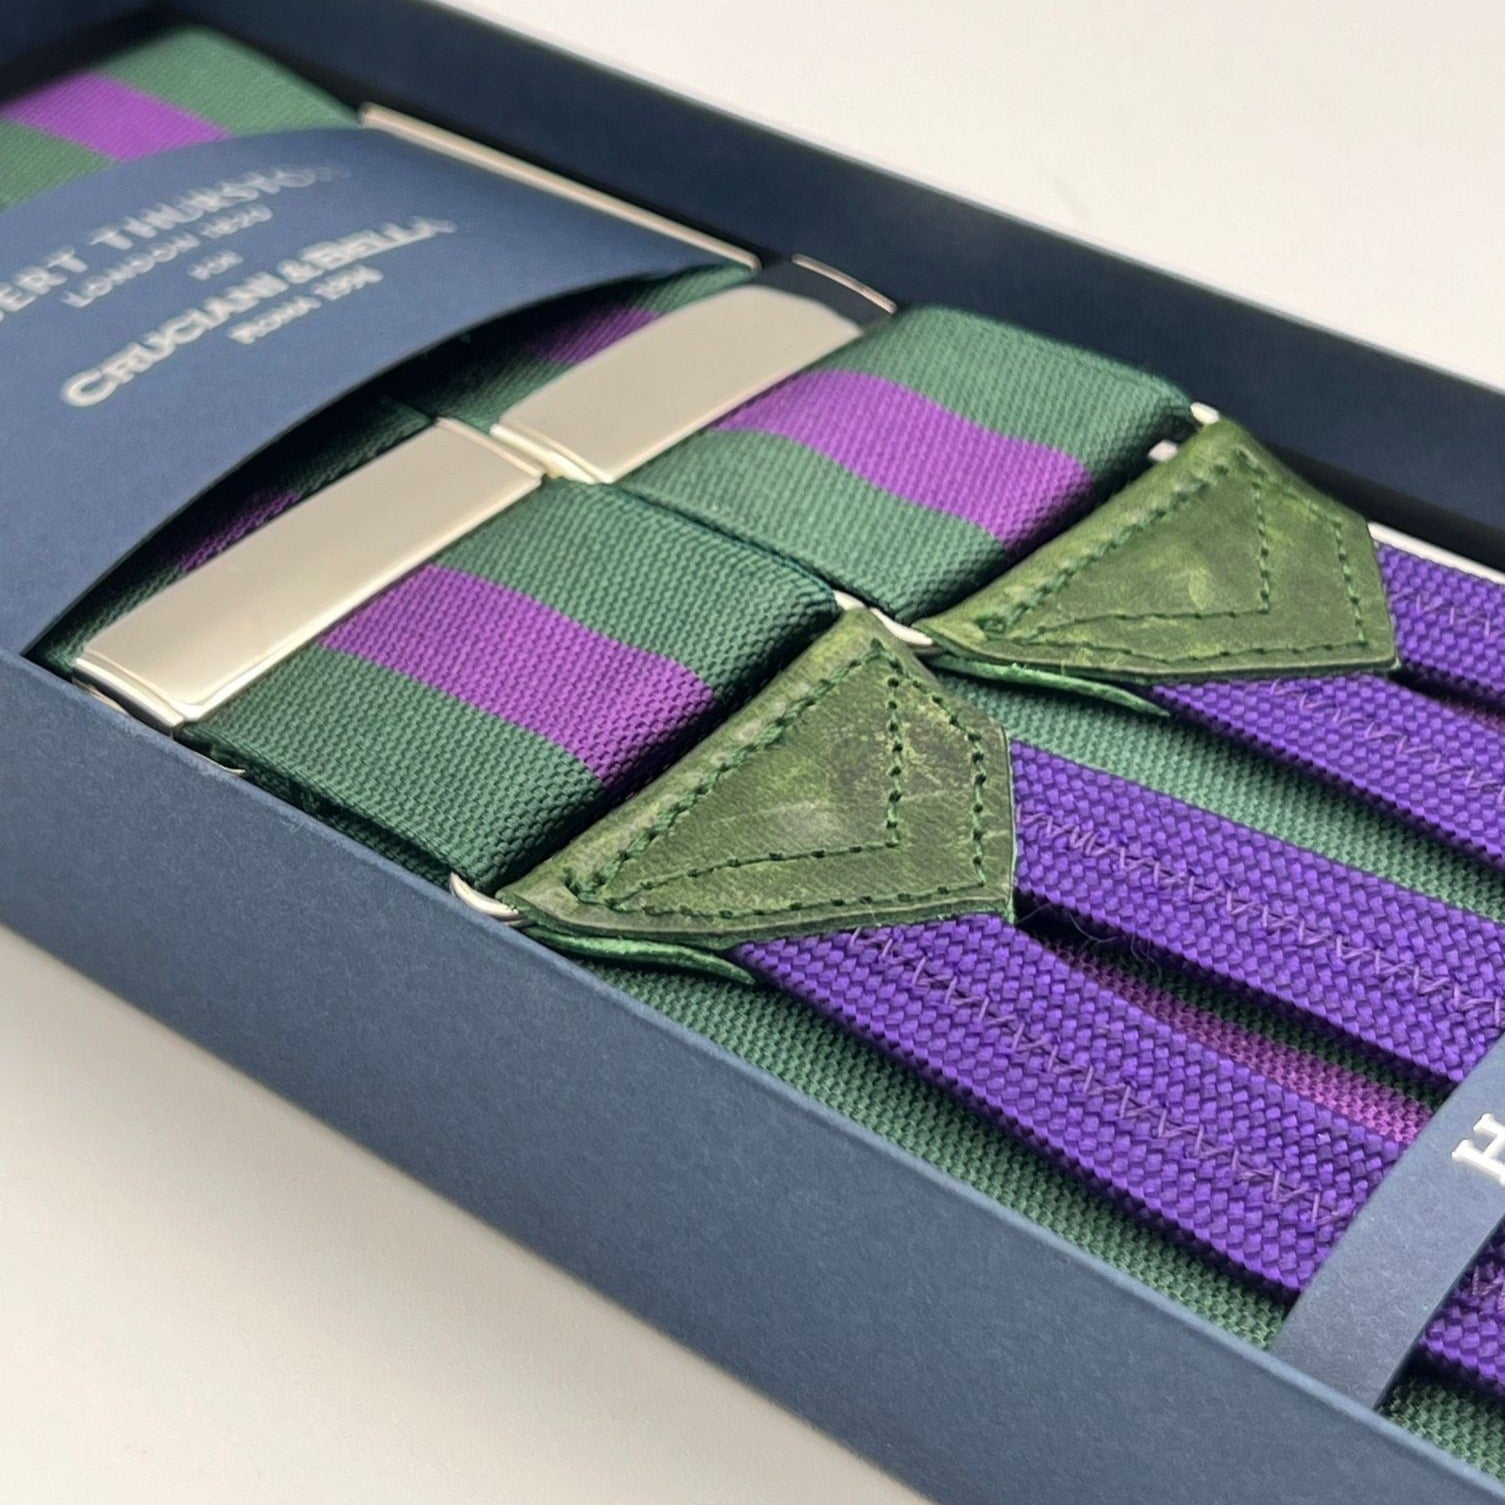 Albert Thurston - Woven Barathea Braces - 40 mm - Green and Purple stripes #3762